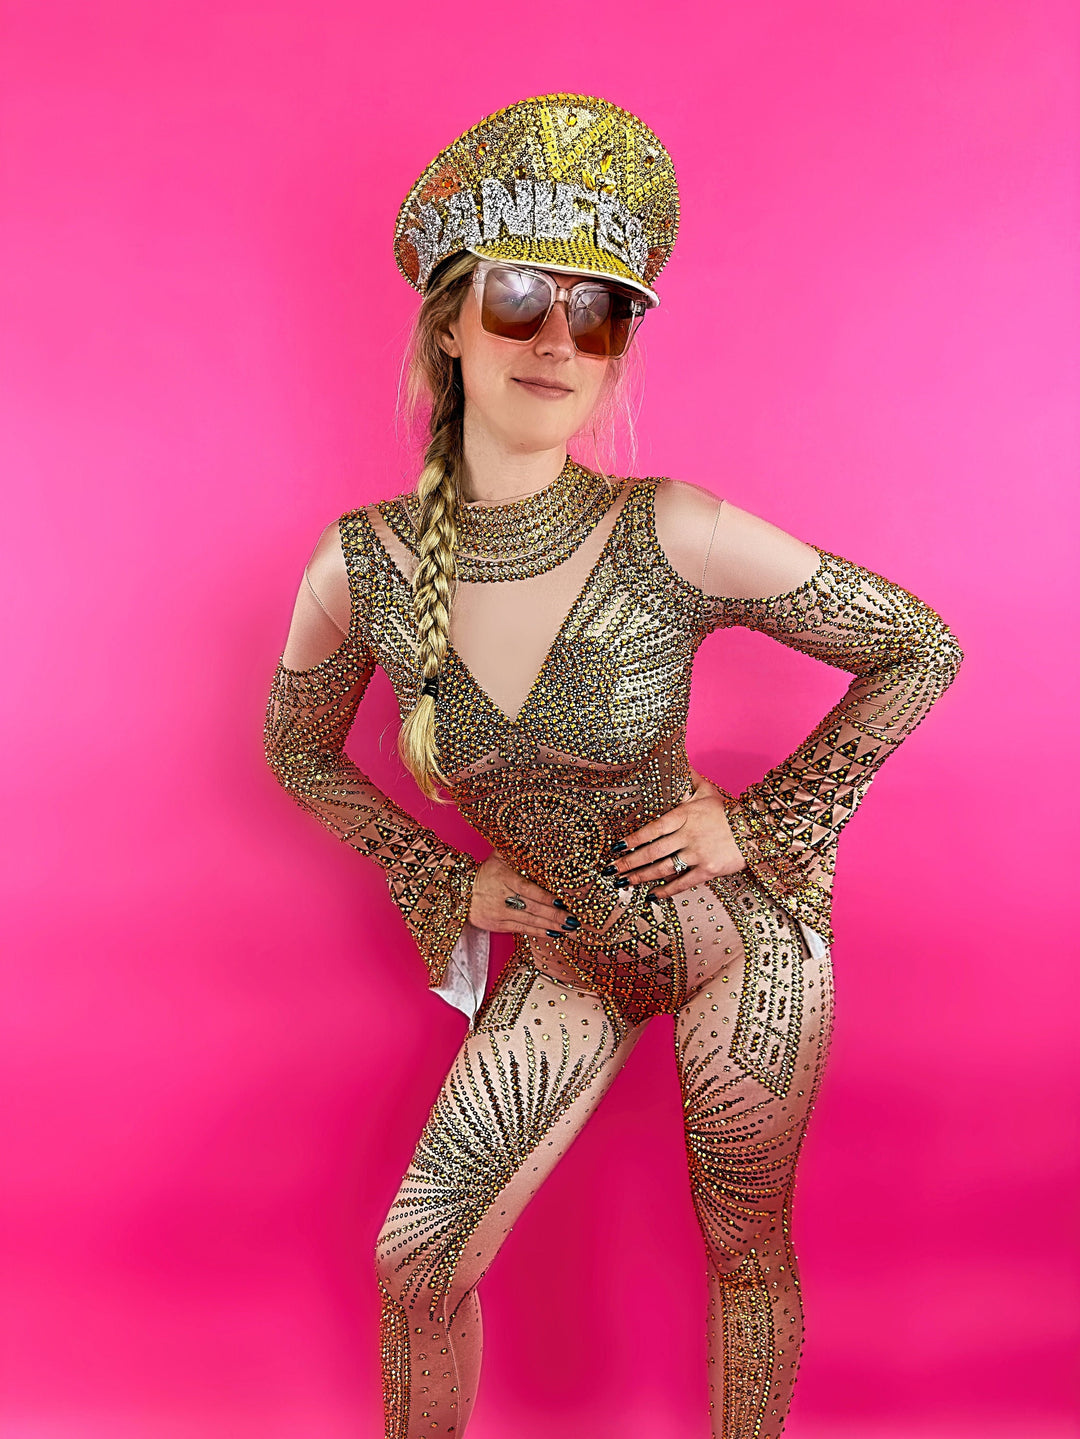 Ara Rhinestone Bodysuit / Gold Sun Party Dress Diamond Crystal Catsuit / Festival Outfit / Desert NYE Tribal Burning Man Performer Dance